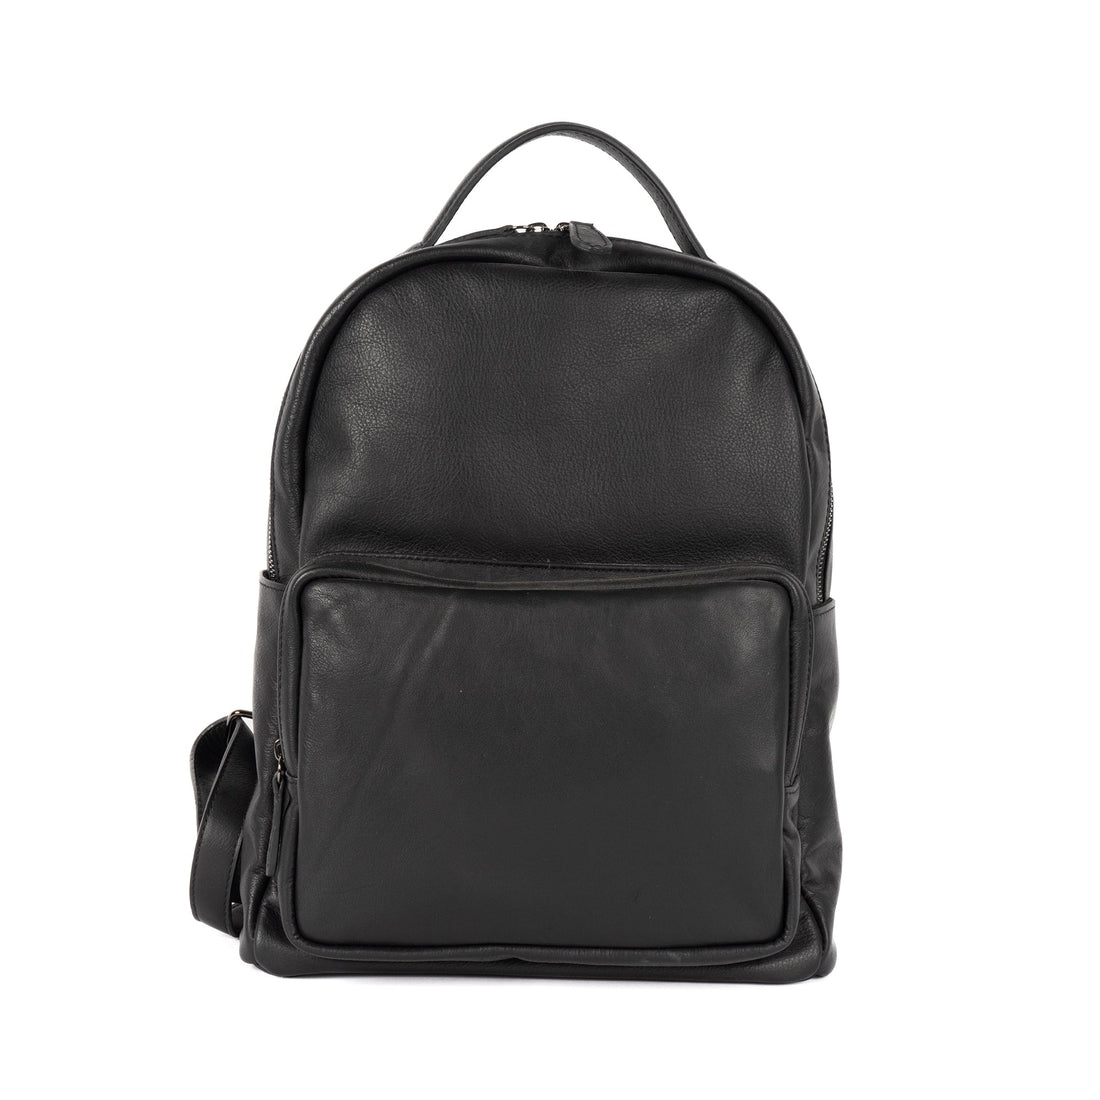 Maya Leather Backpacks - Black - Zengoda Shop online from Artisan Brands